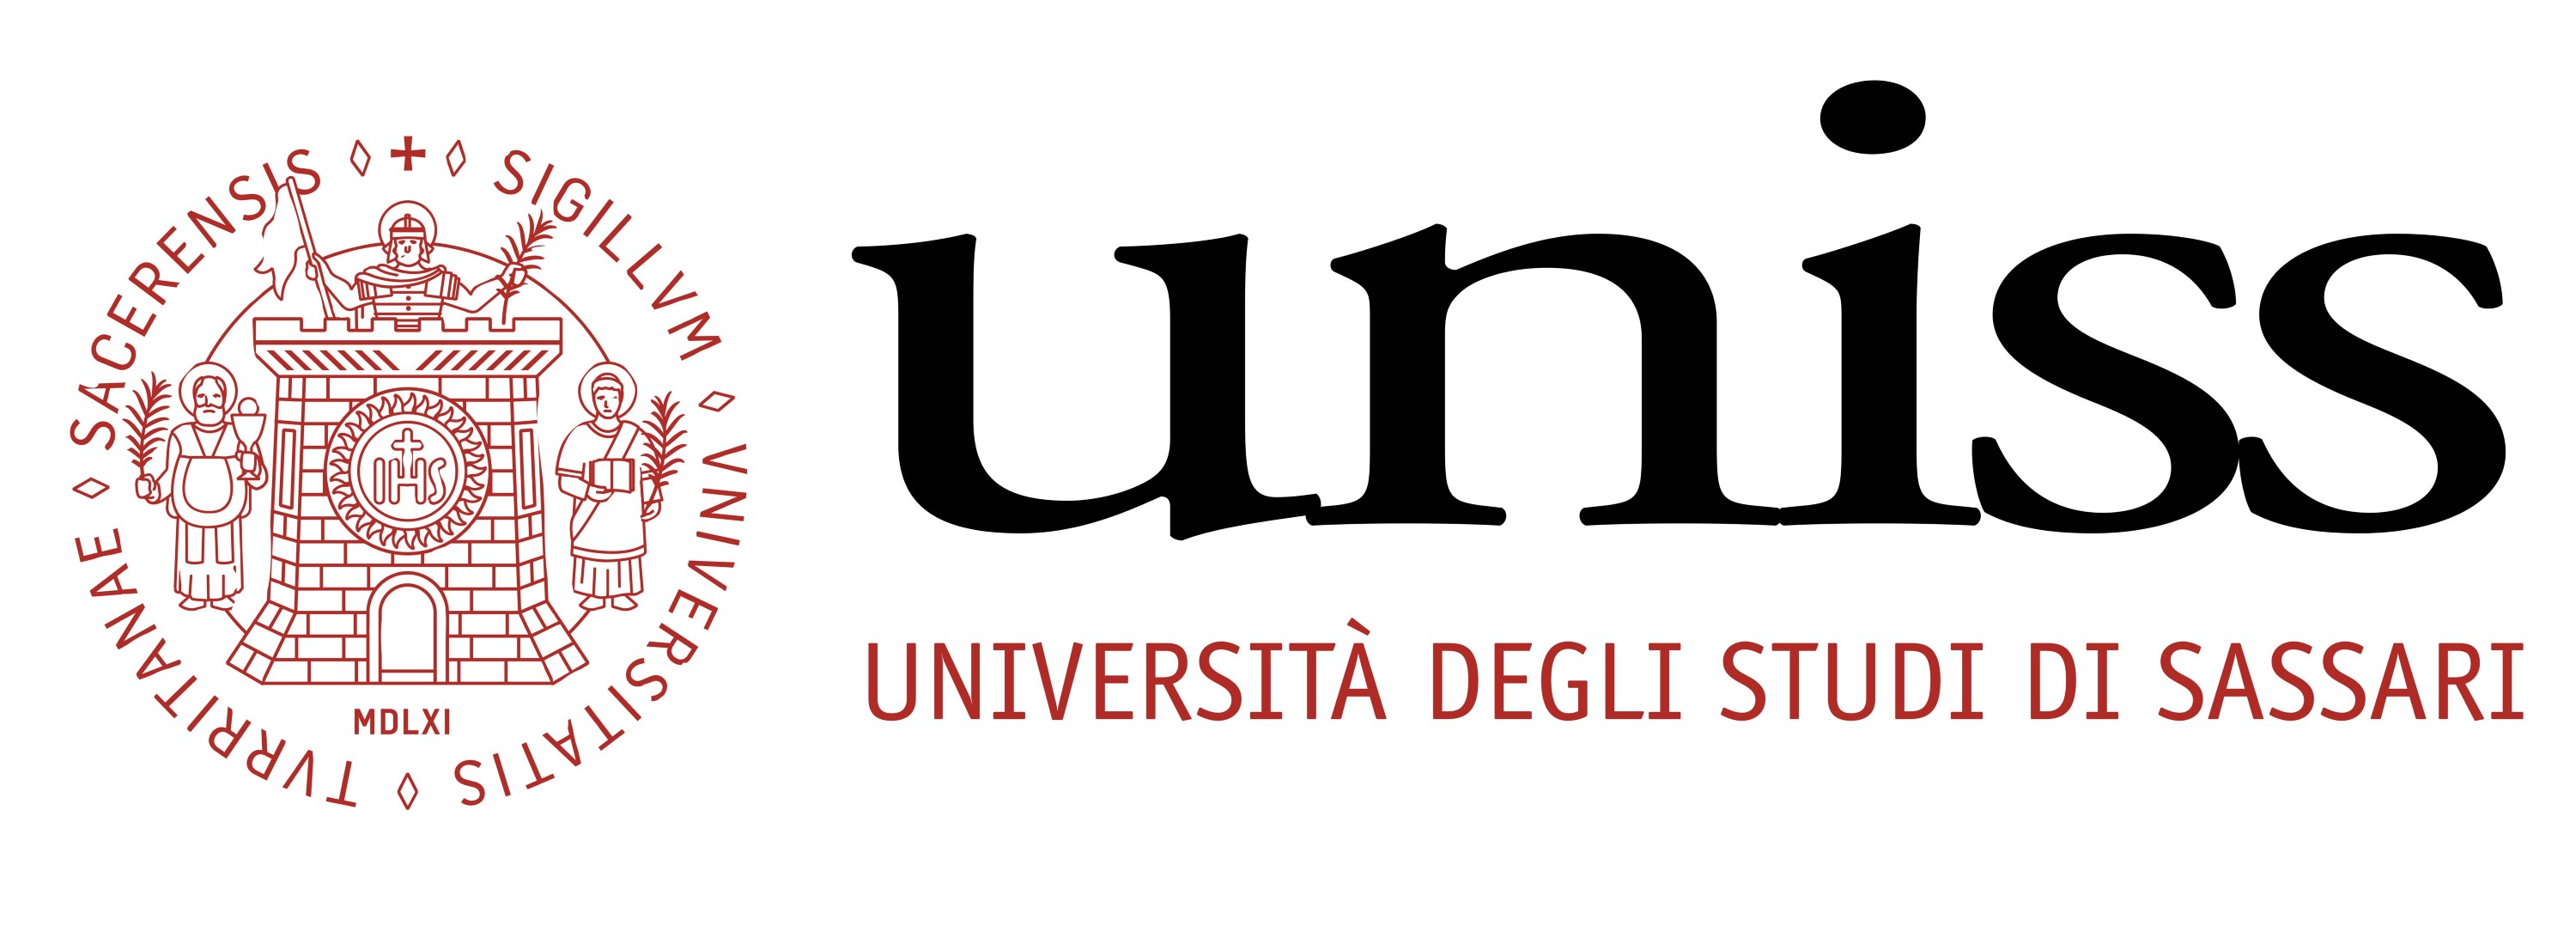 14-surprising-facts-about-university-of-sassari